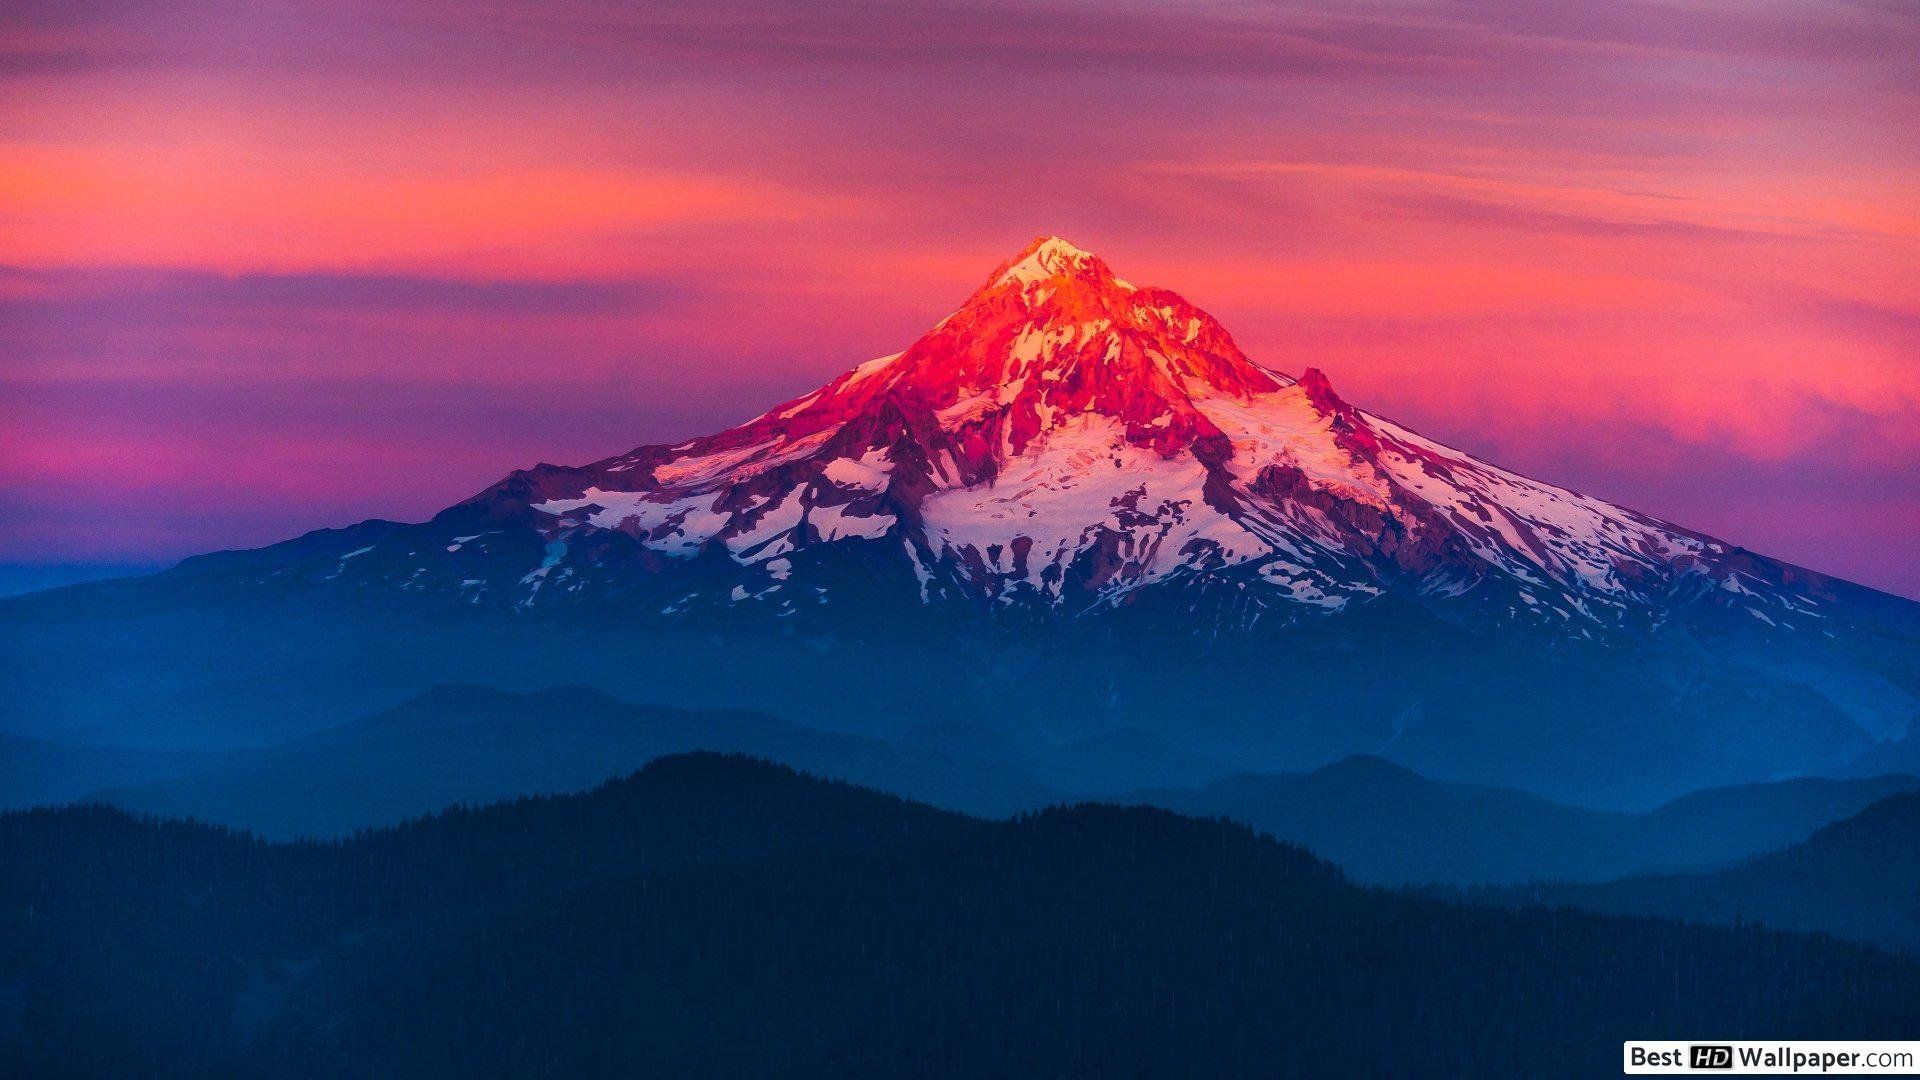 Sunset Over Mountains Wallpaper